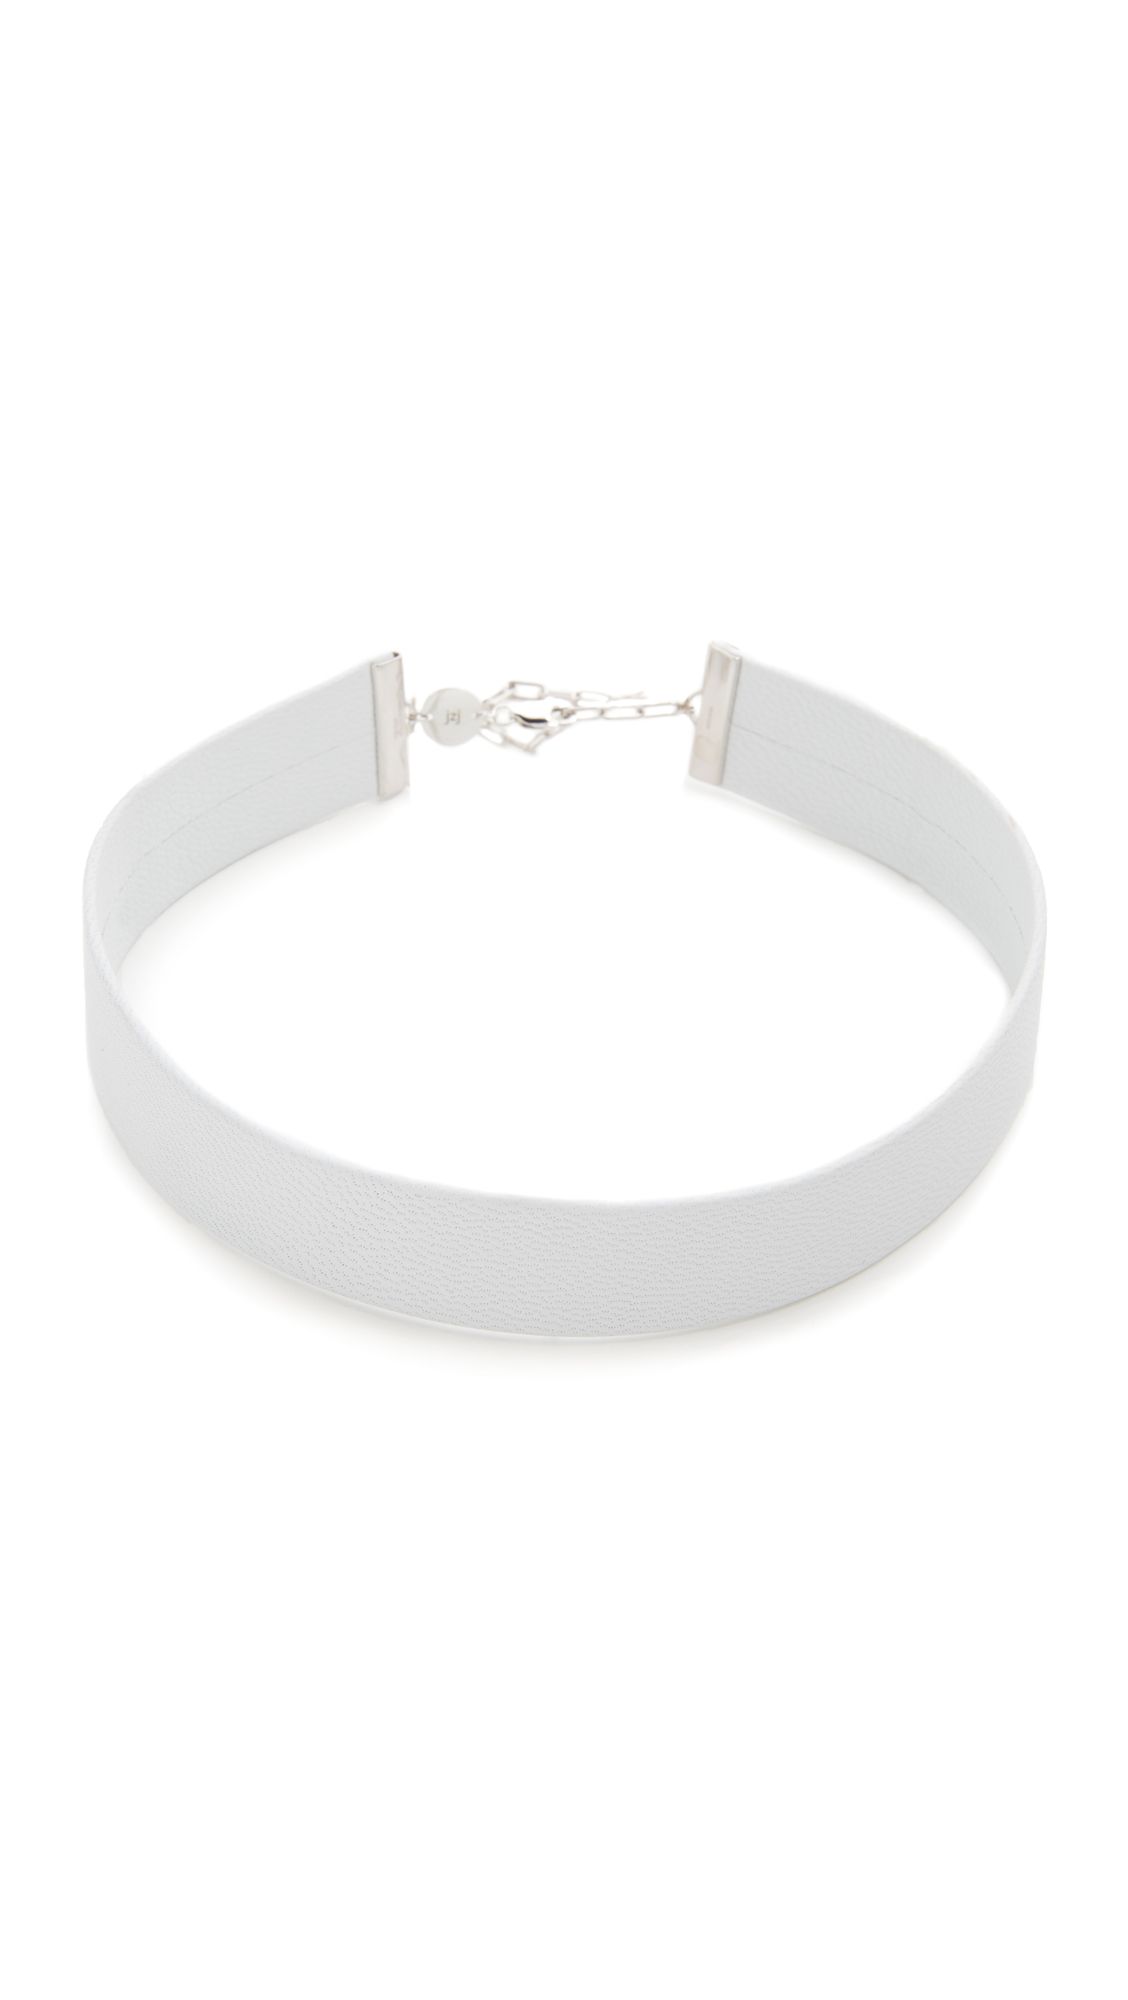 Jennifer Zeuner Jewelry Leather Choker Necklace - White | Shopbop